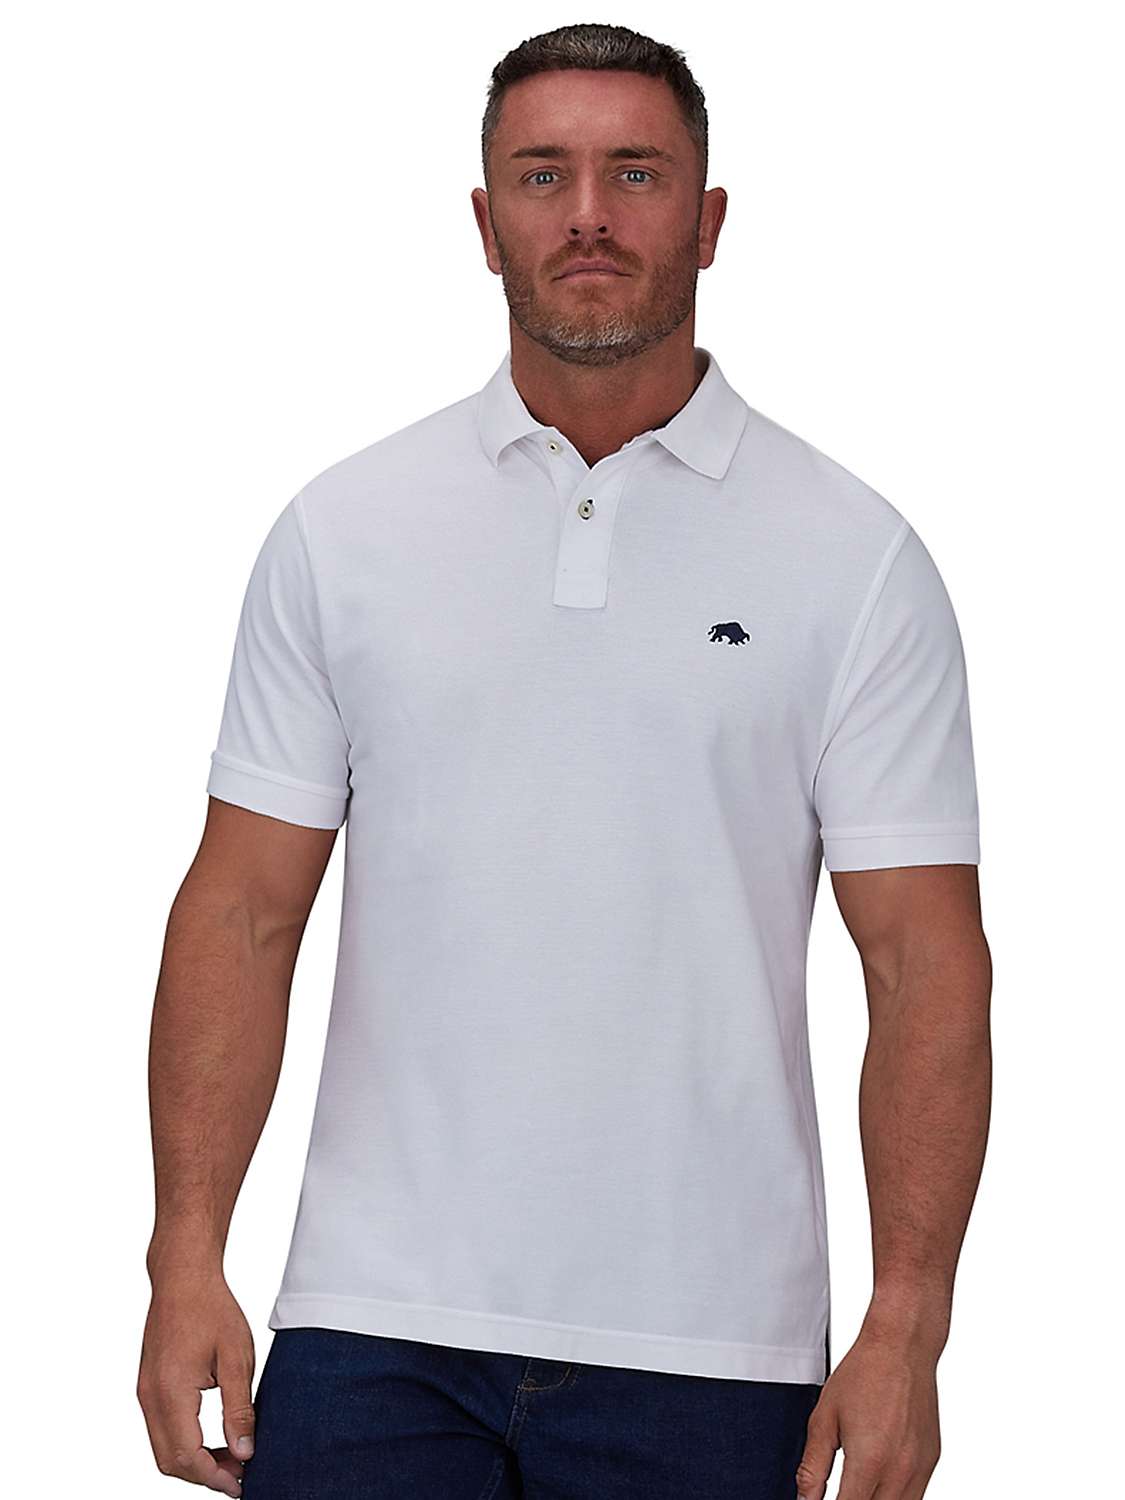 Buy Raging Bull Classic Organic Cotton Pique Polo Shirt Online at johnlewis.com